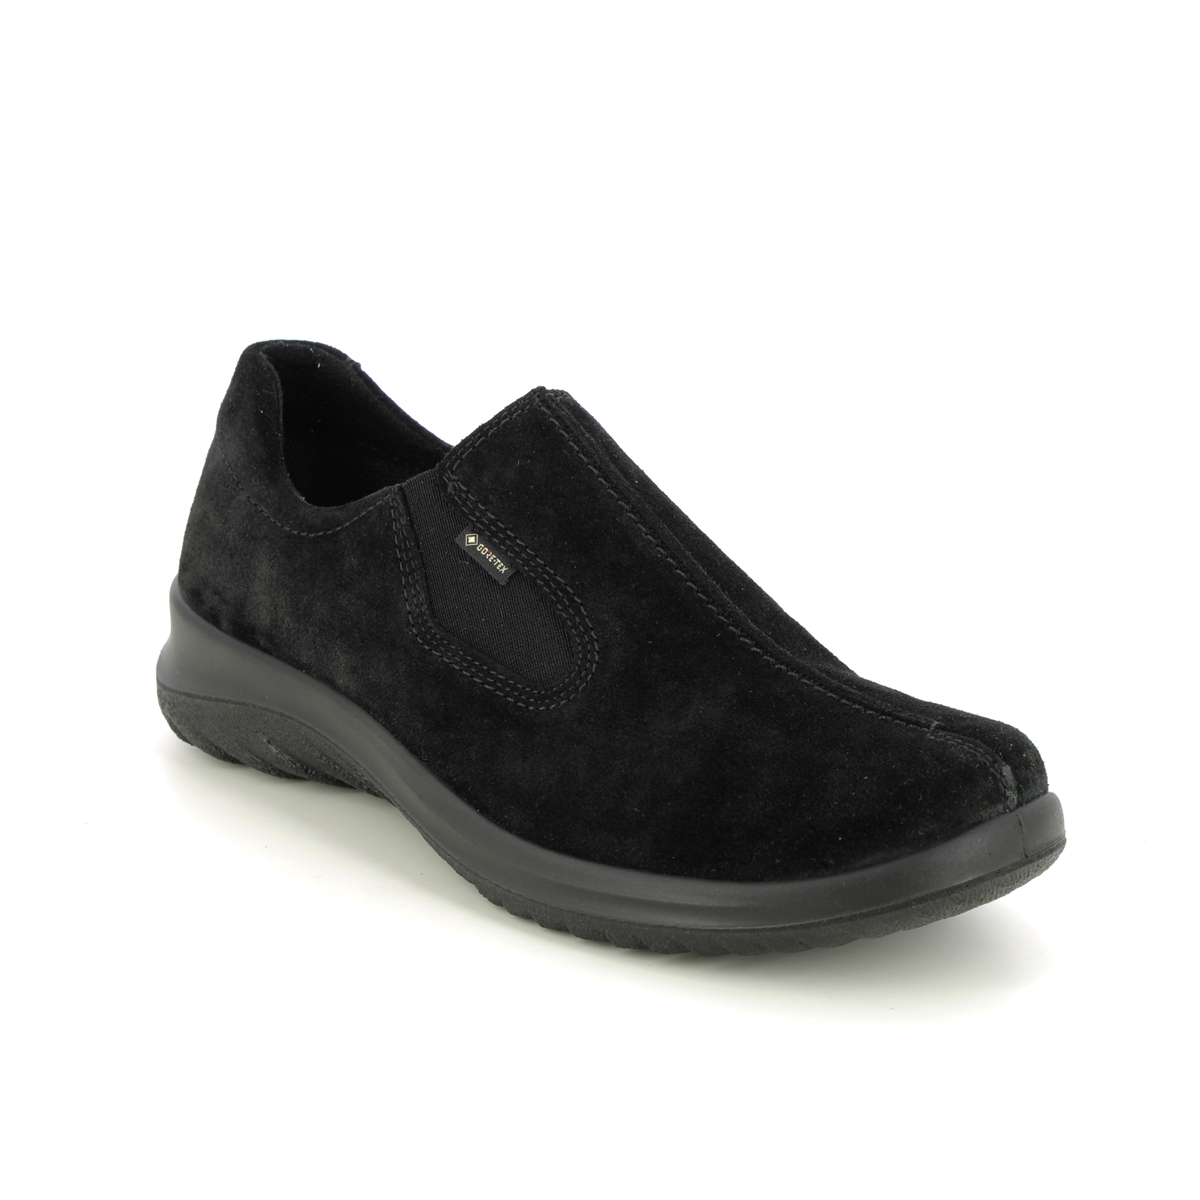 Legero Soft Shoe Gtx Black Suede Womens Comfort Slip On Shoes 2009568-0000 In Size 6.5 In Plain Black Suede